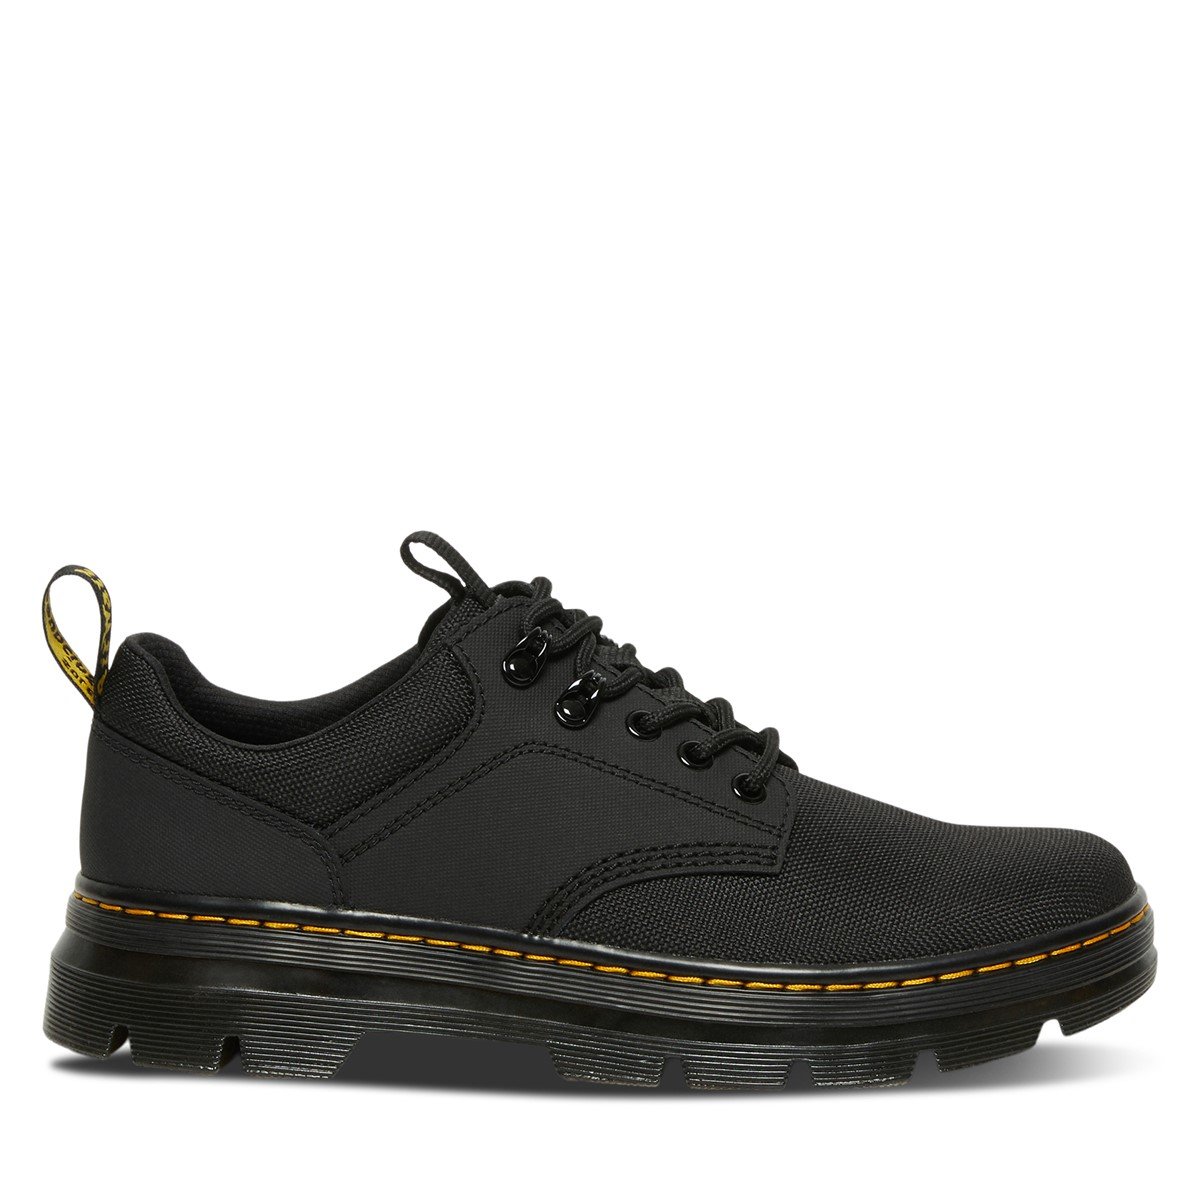 Men's Reeder Lace-Up Shoes in Black